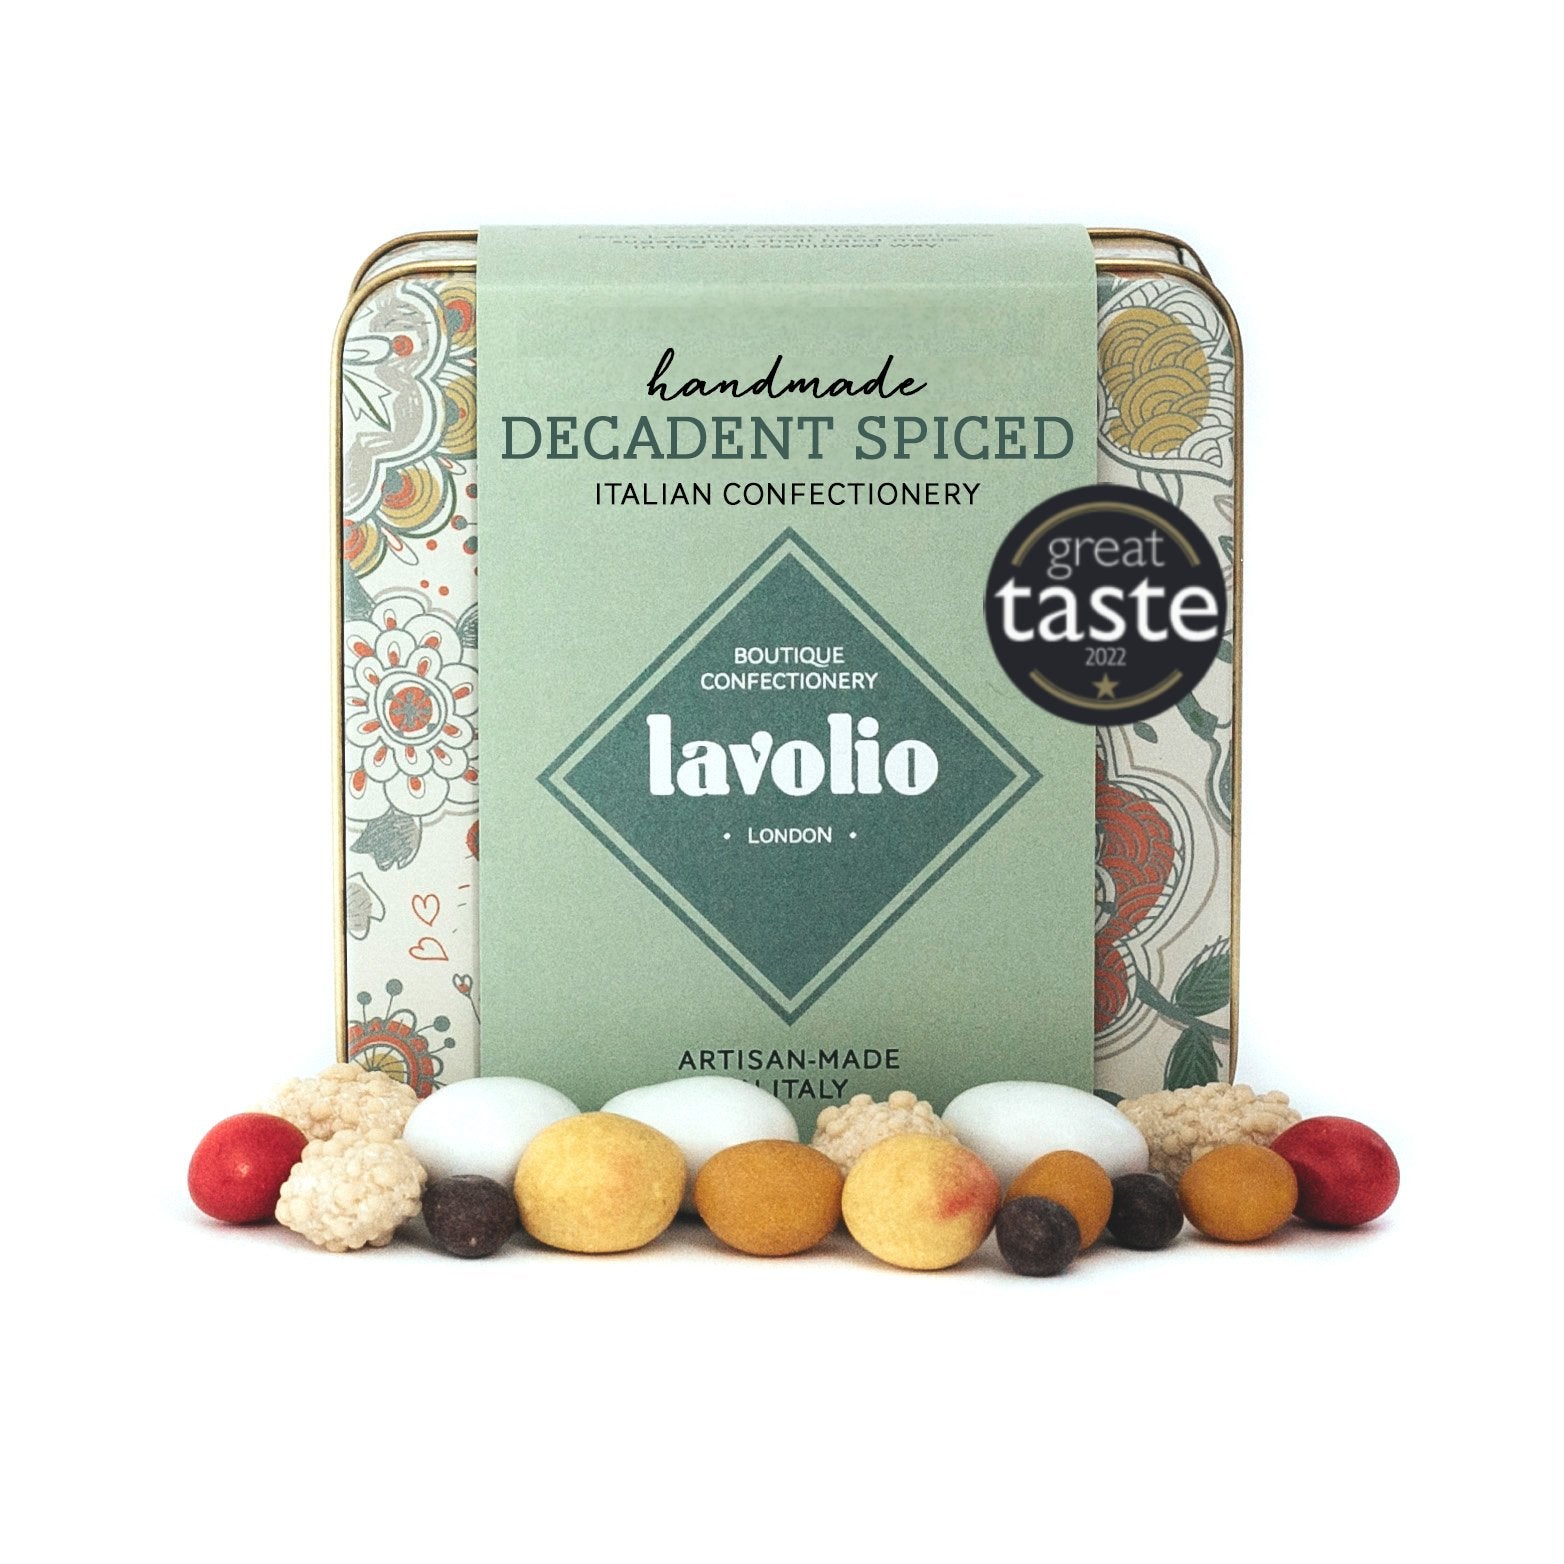 Lavolio boutique confectionery London Decadent Spiced